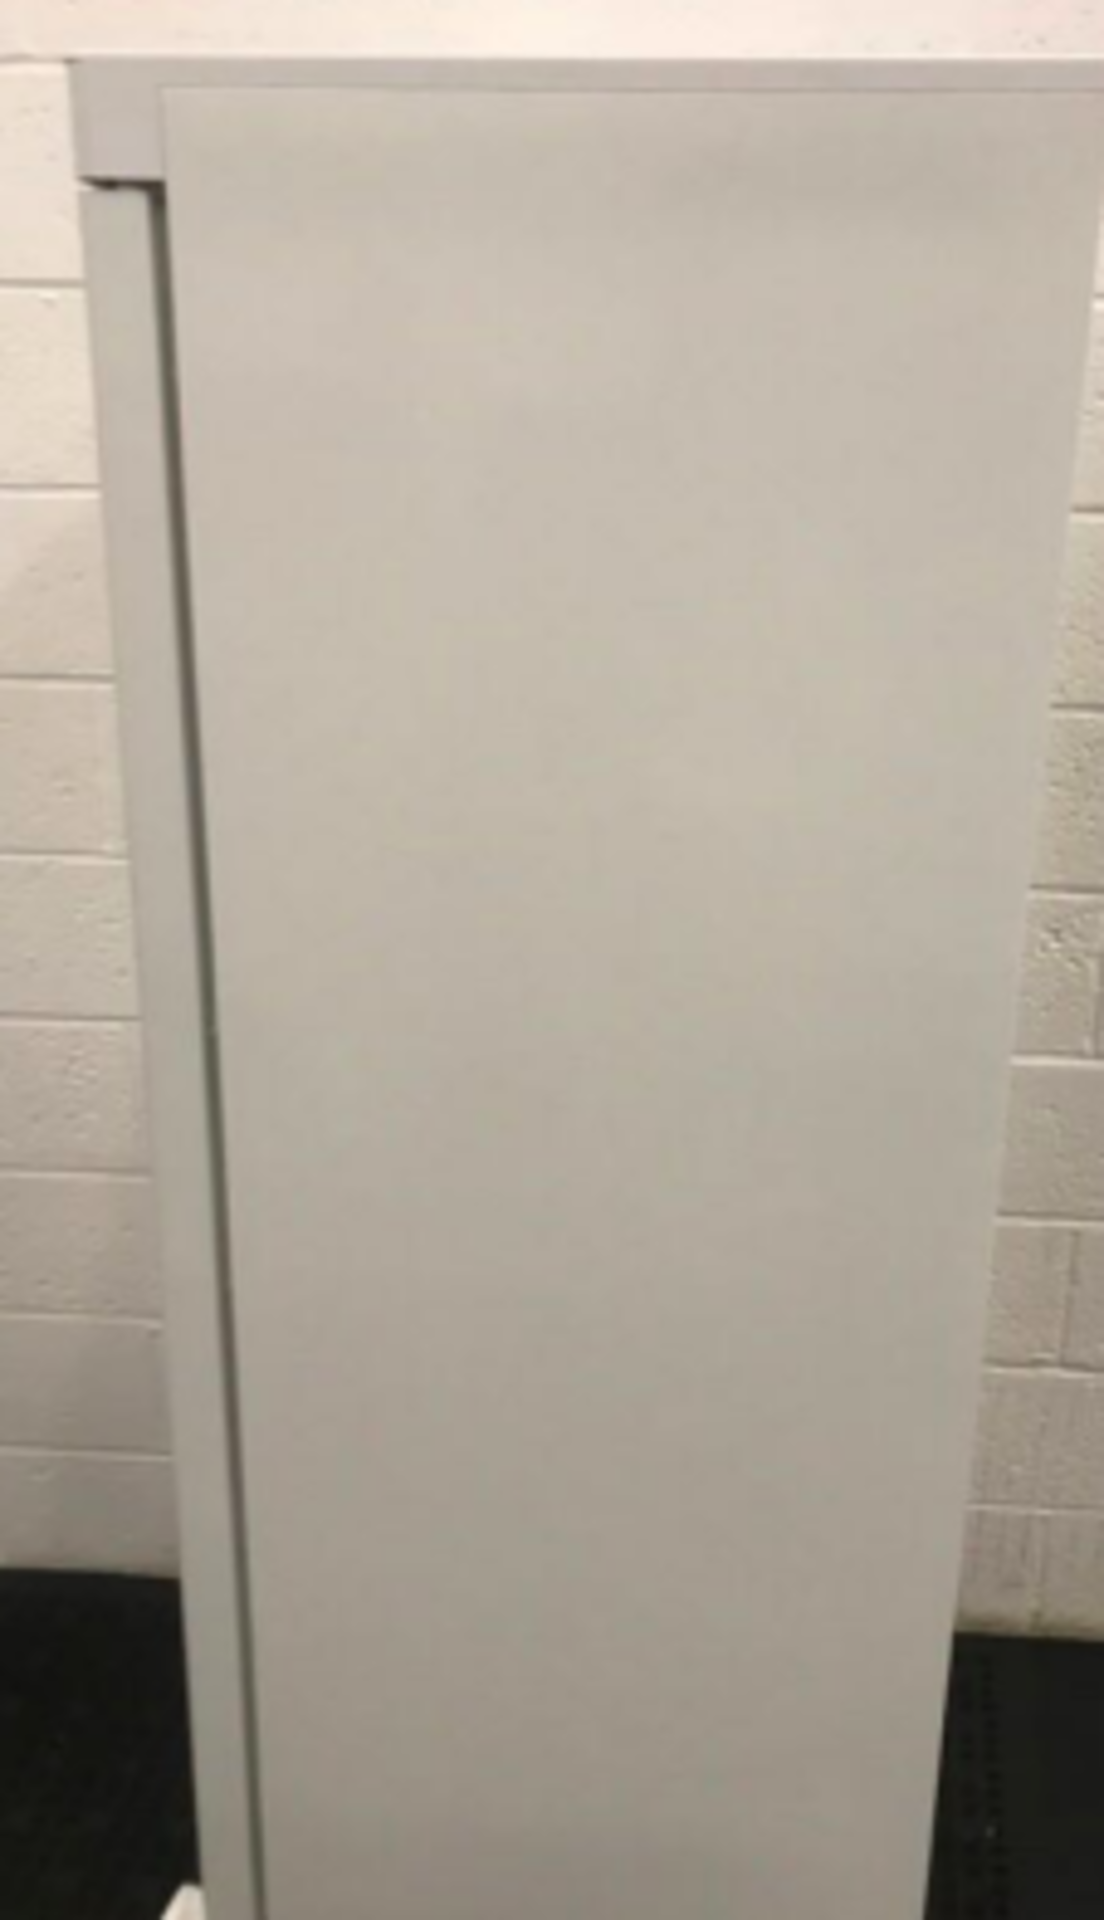 Compact refrigerator K 410 LG C 6W - Image 7 of 11